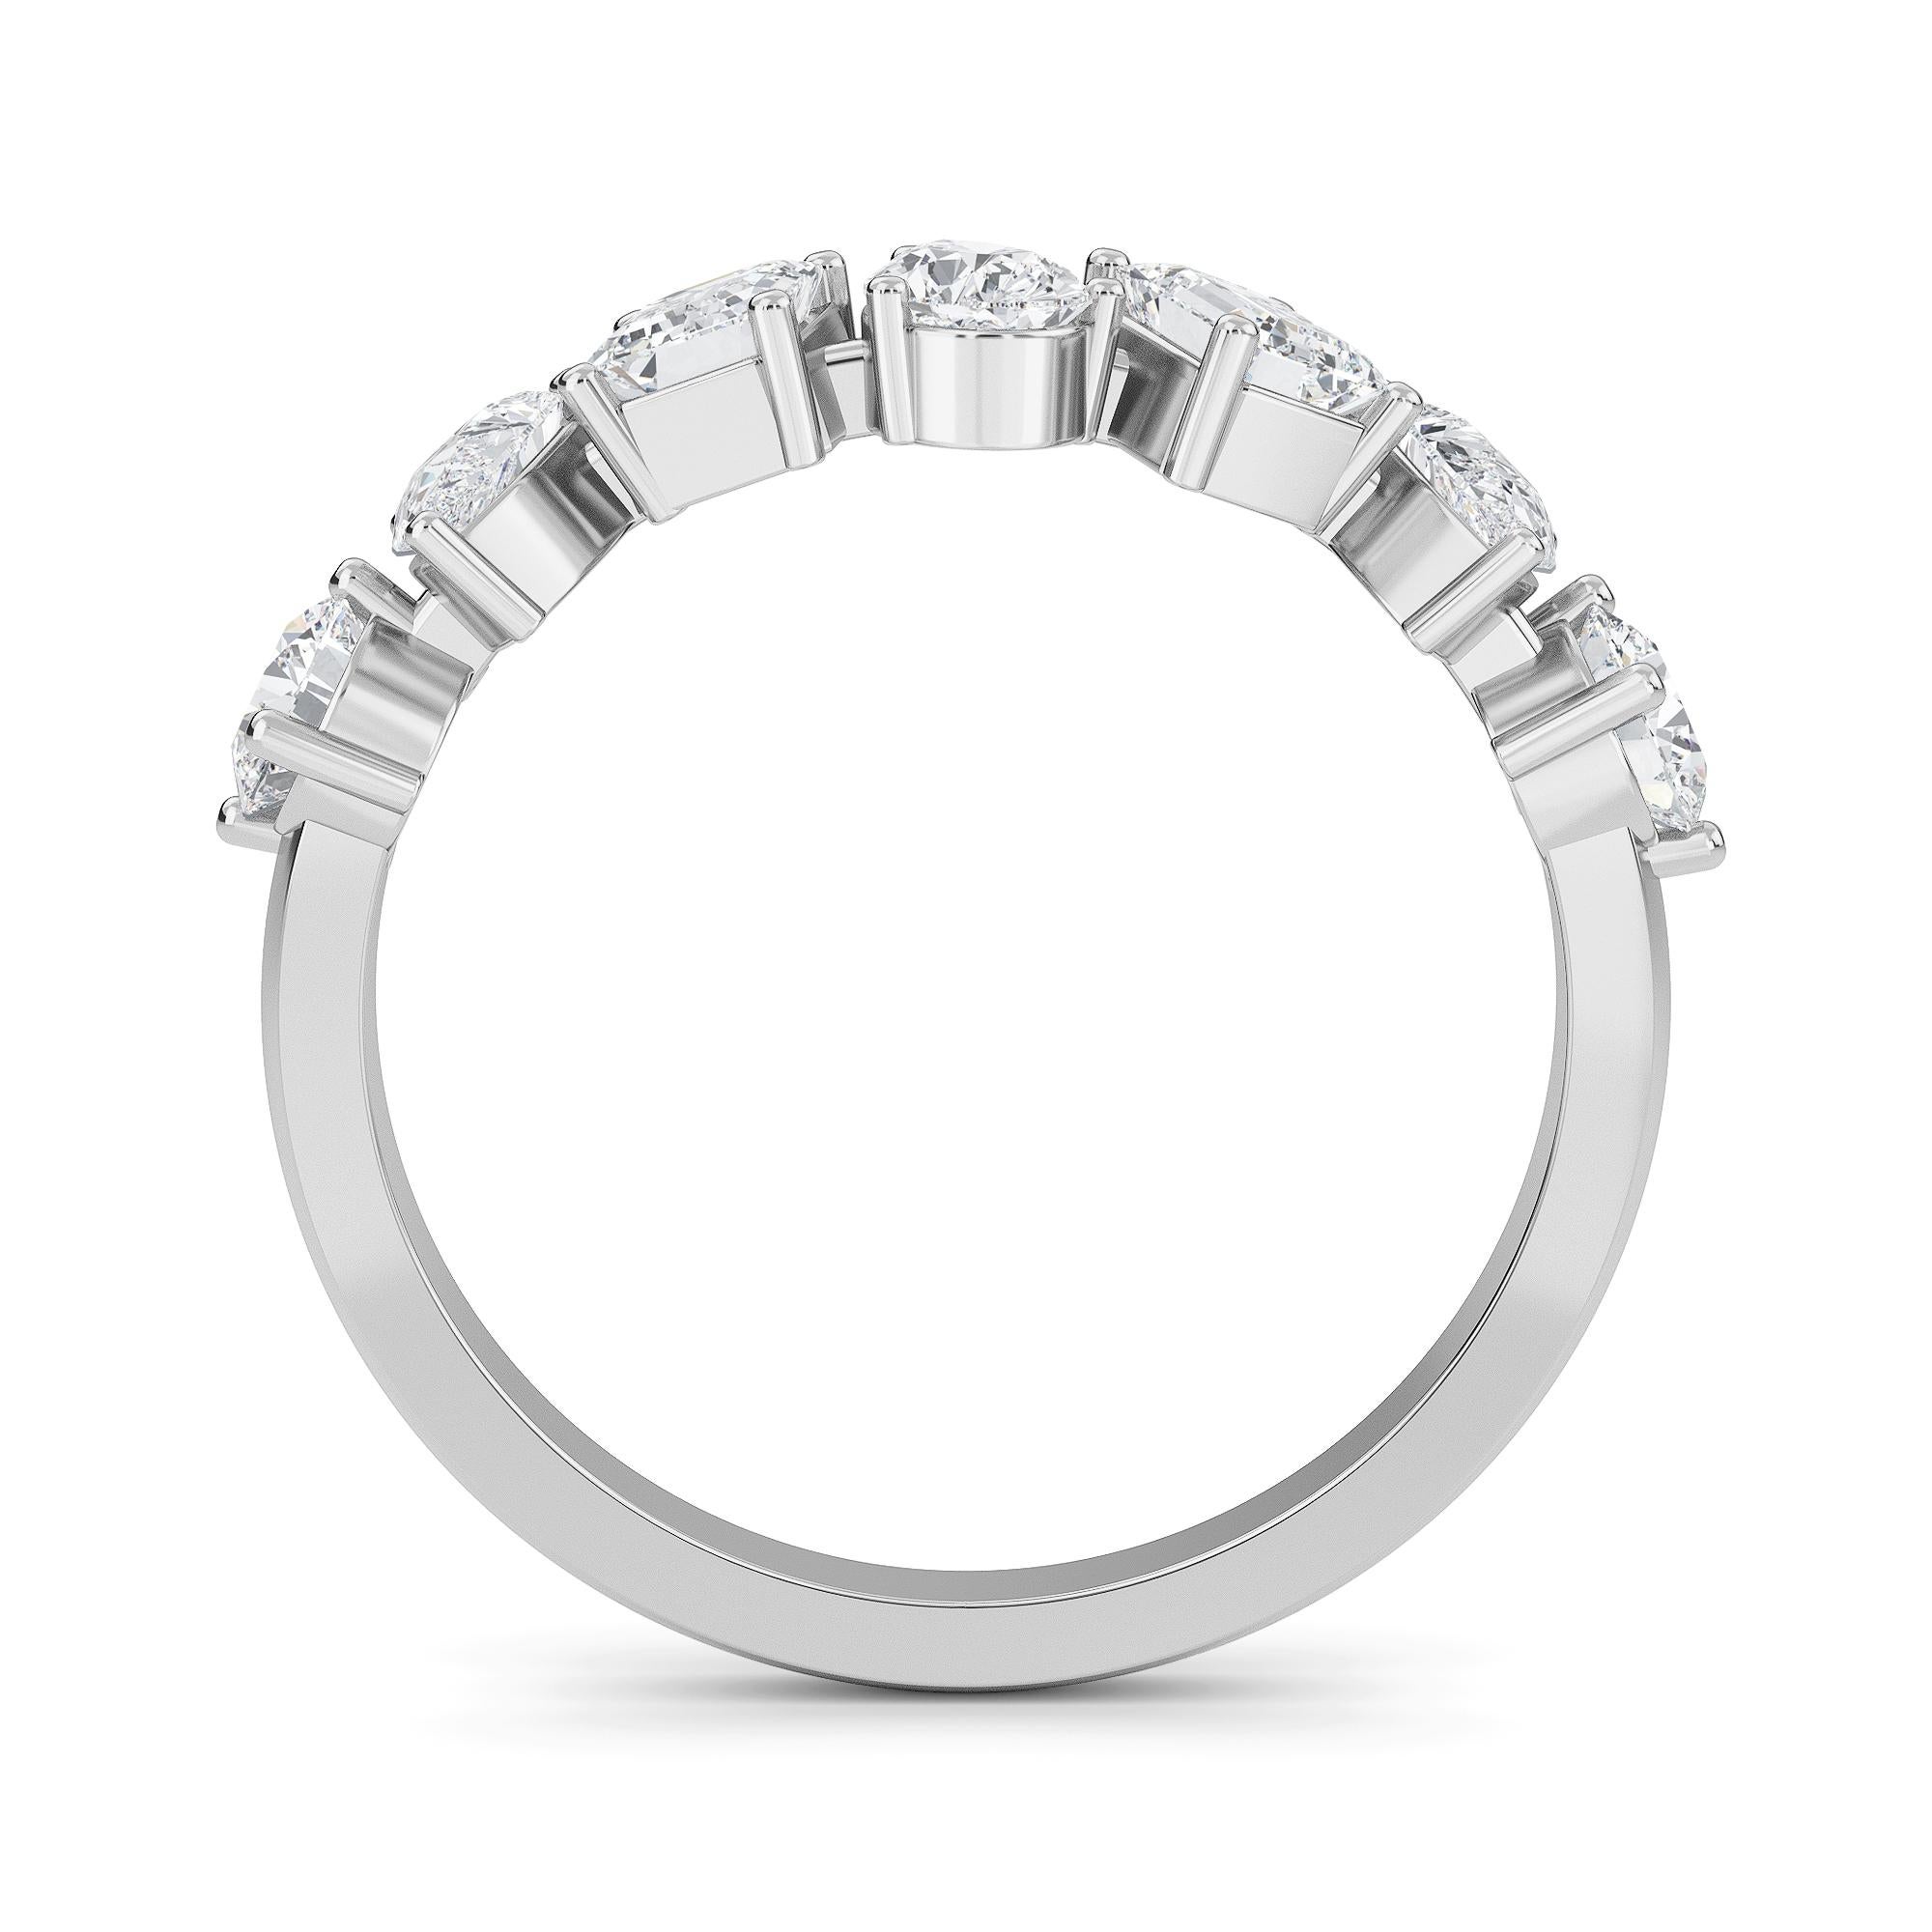 For Sale:  Single Row Concoction Twist Bulky Ring by Rupali Adani Fine Jewellery 2